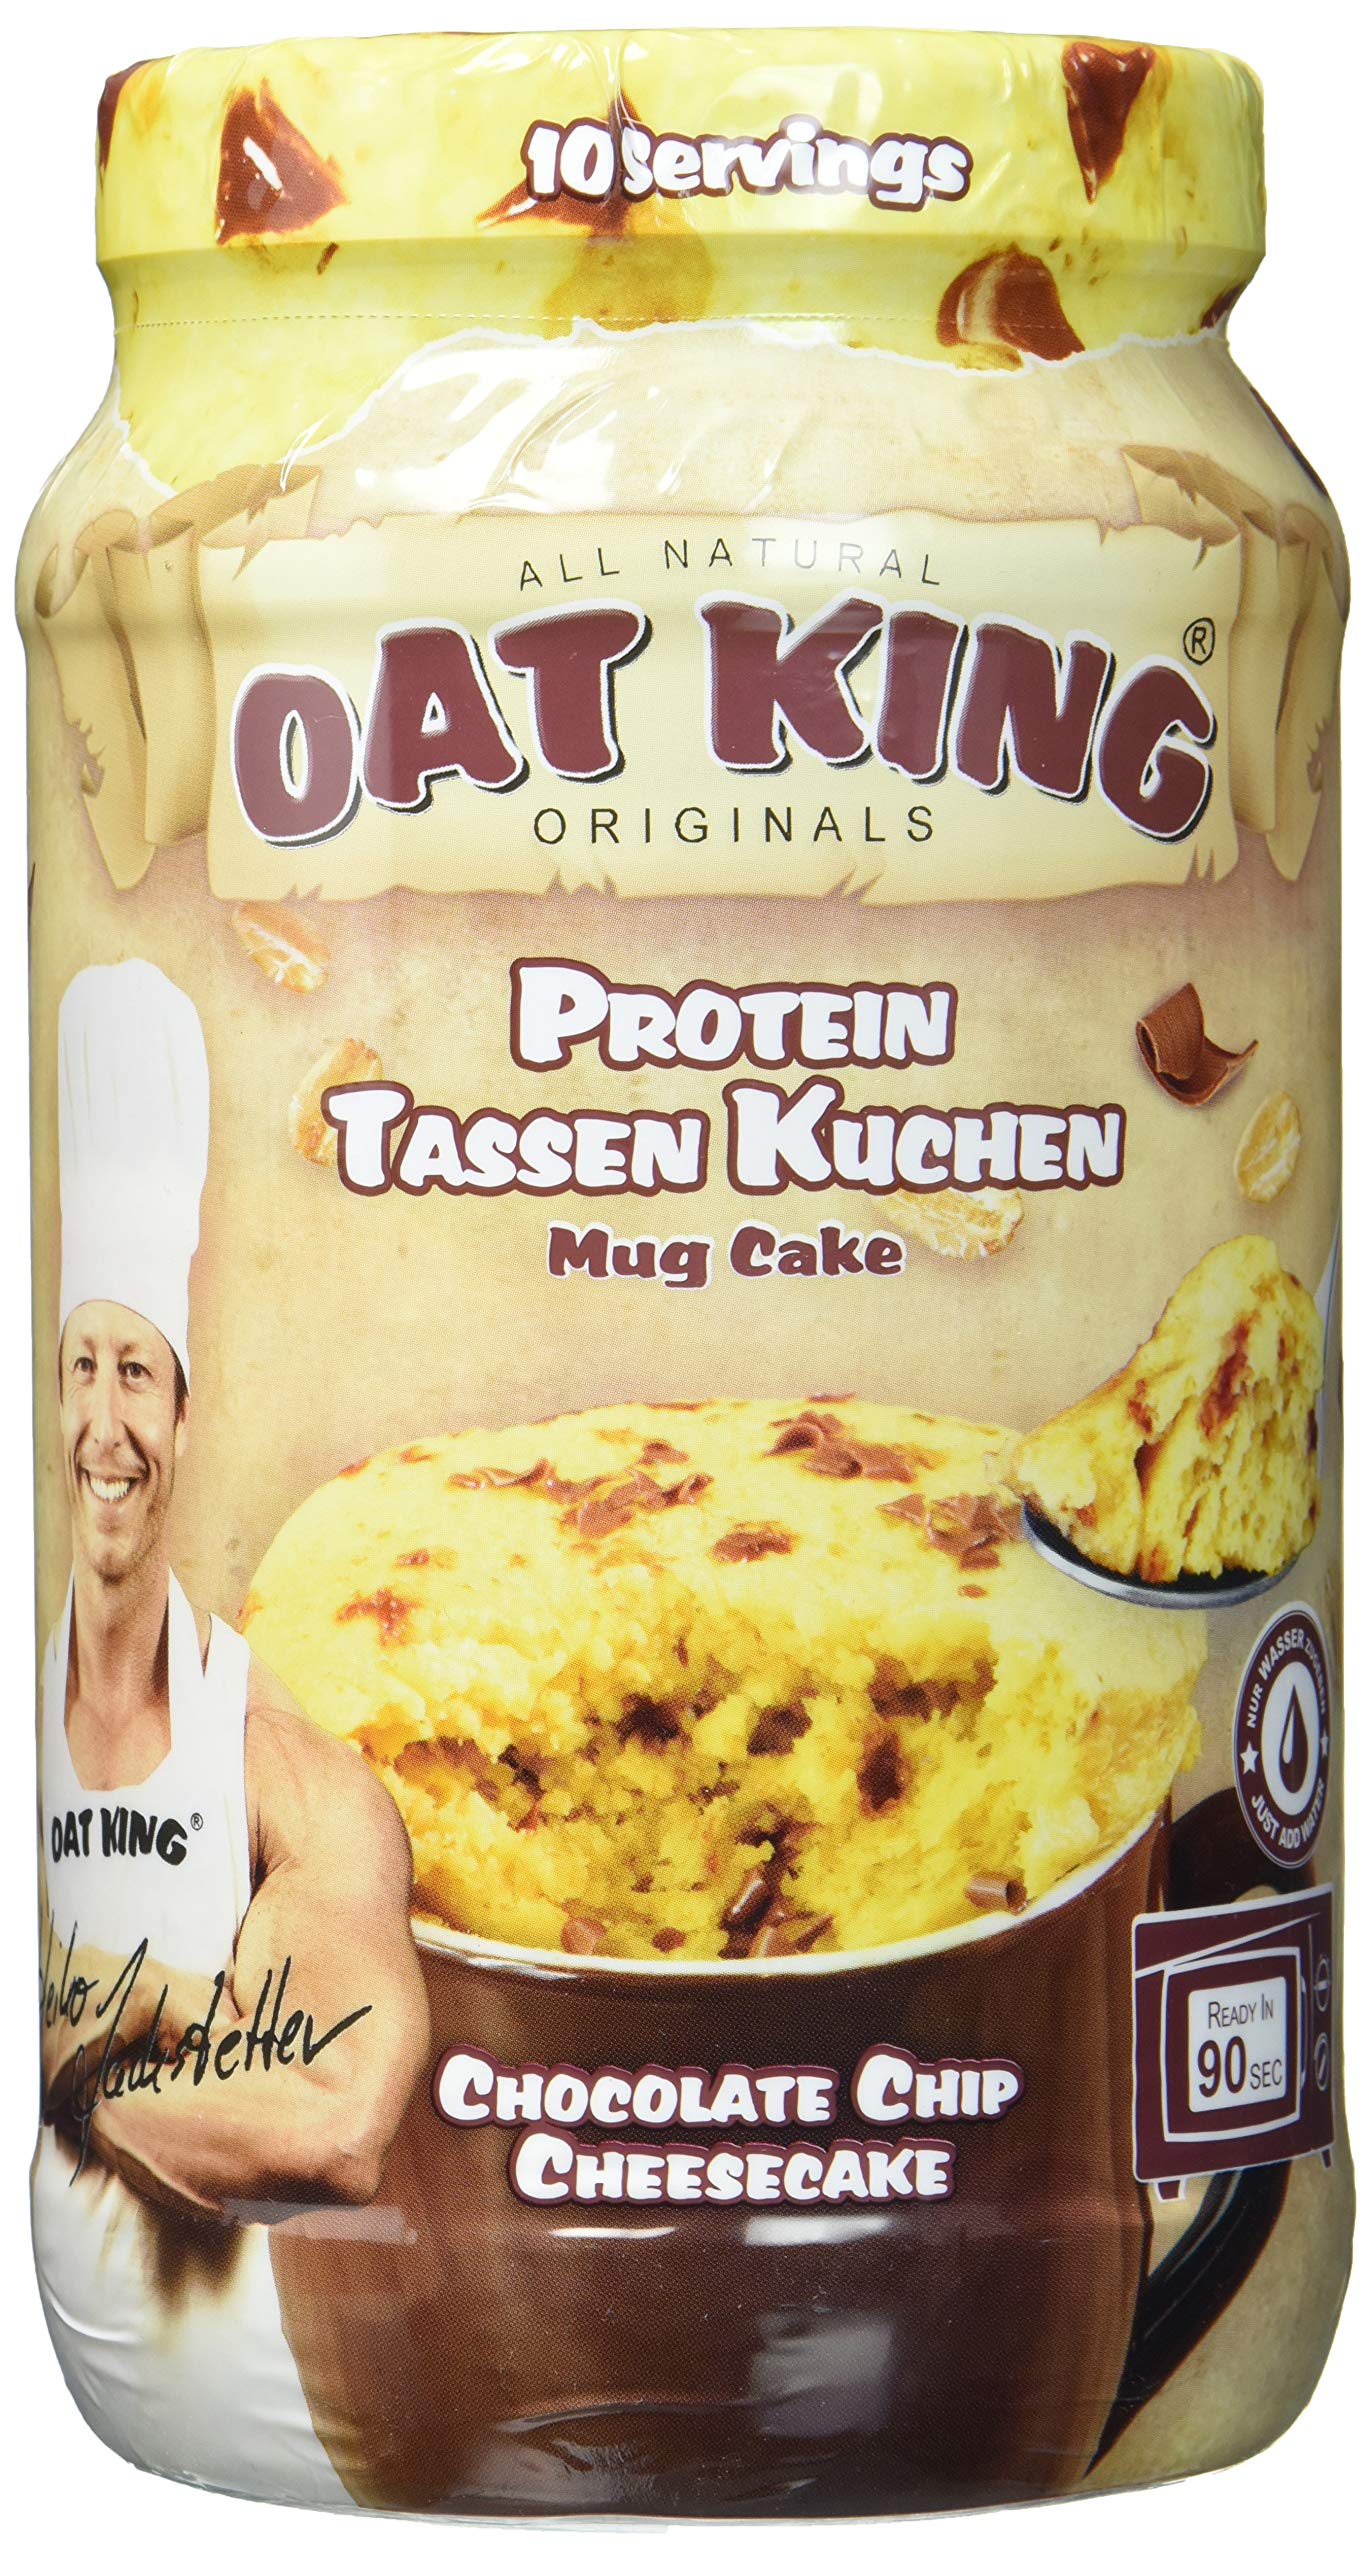 Lsp Oat King Mug Cake Chocolate Chip Cheesecake, 500 g